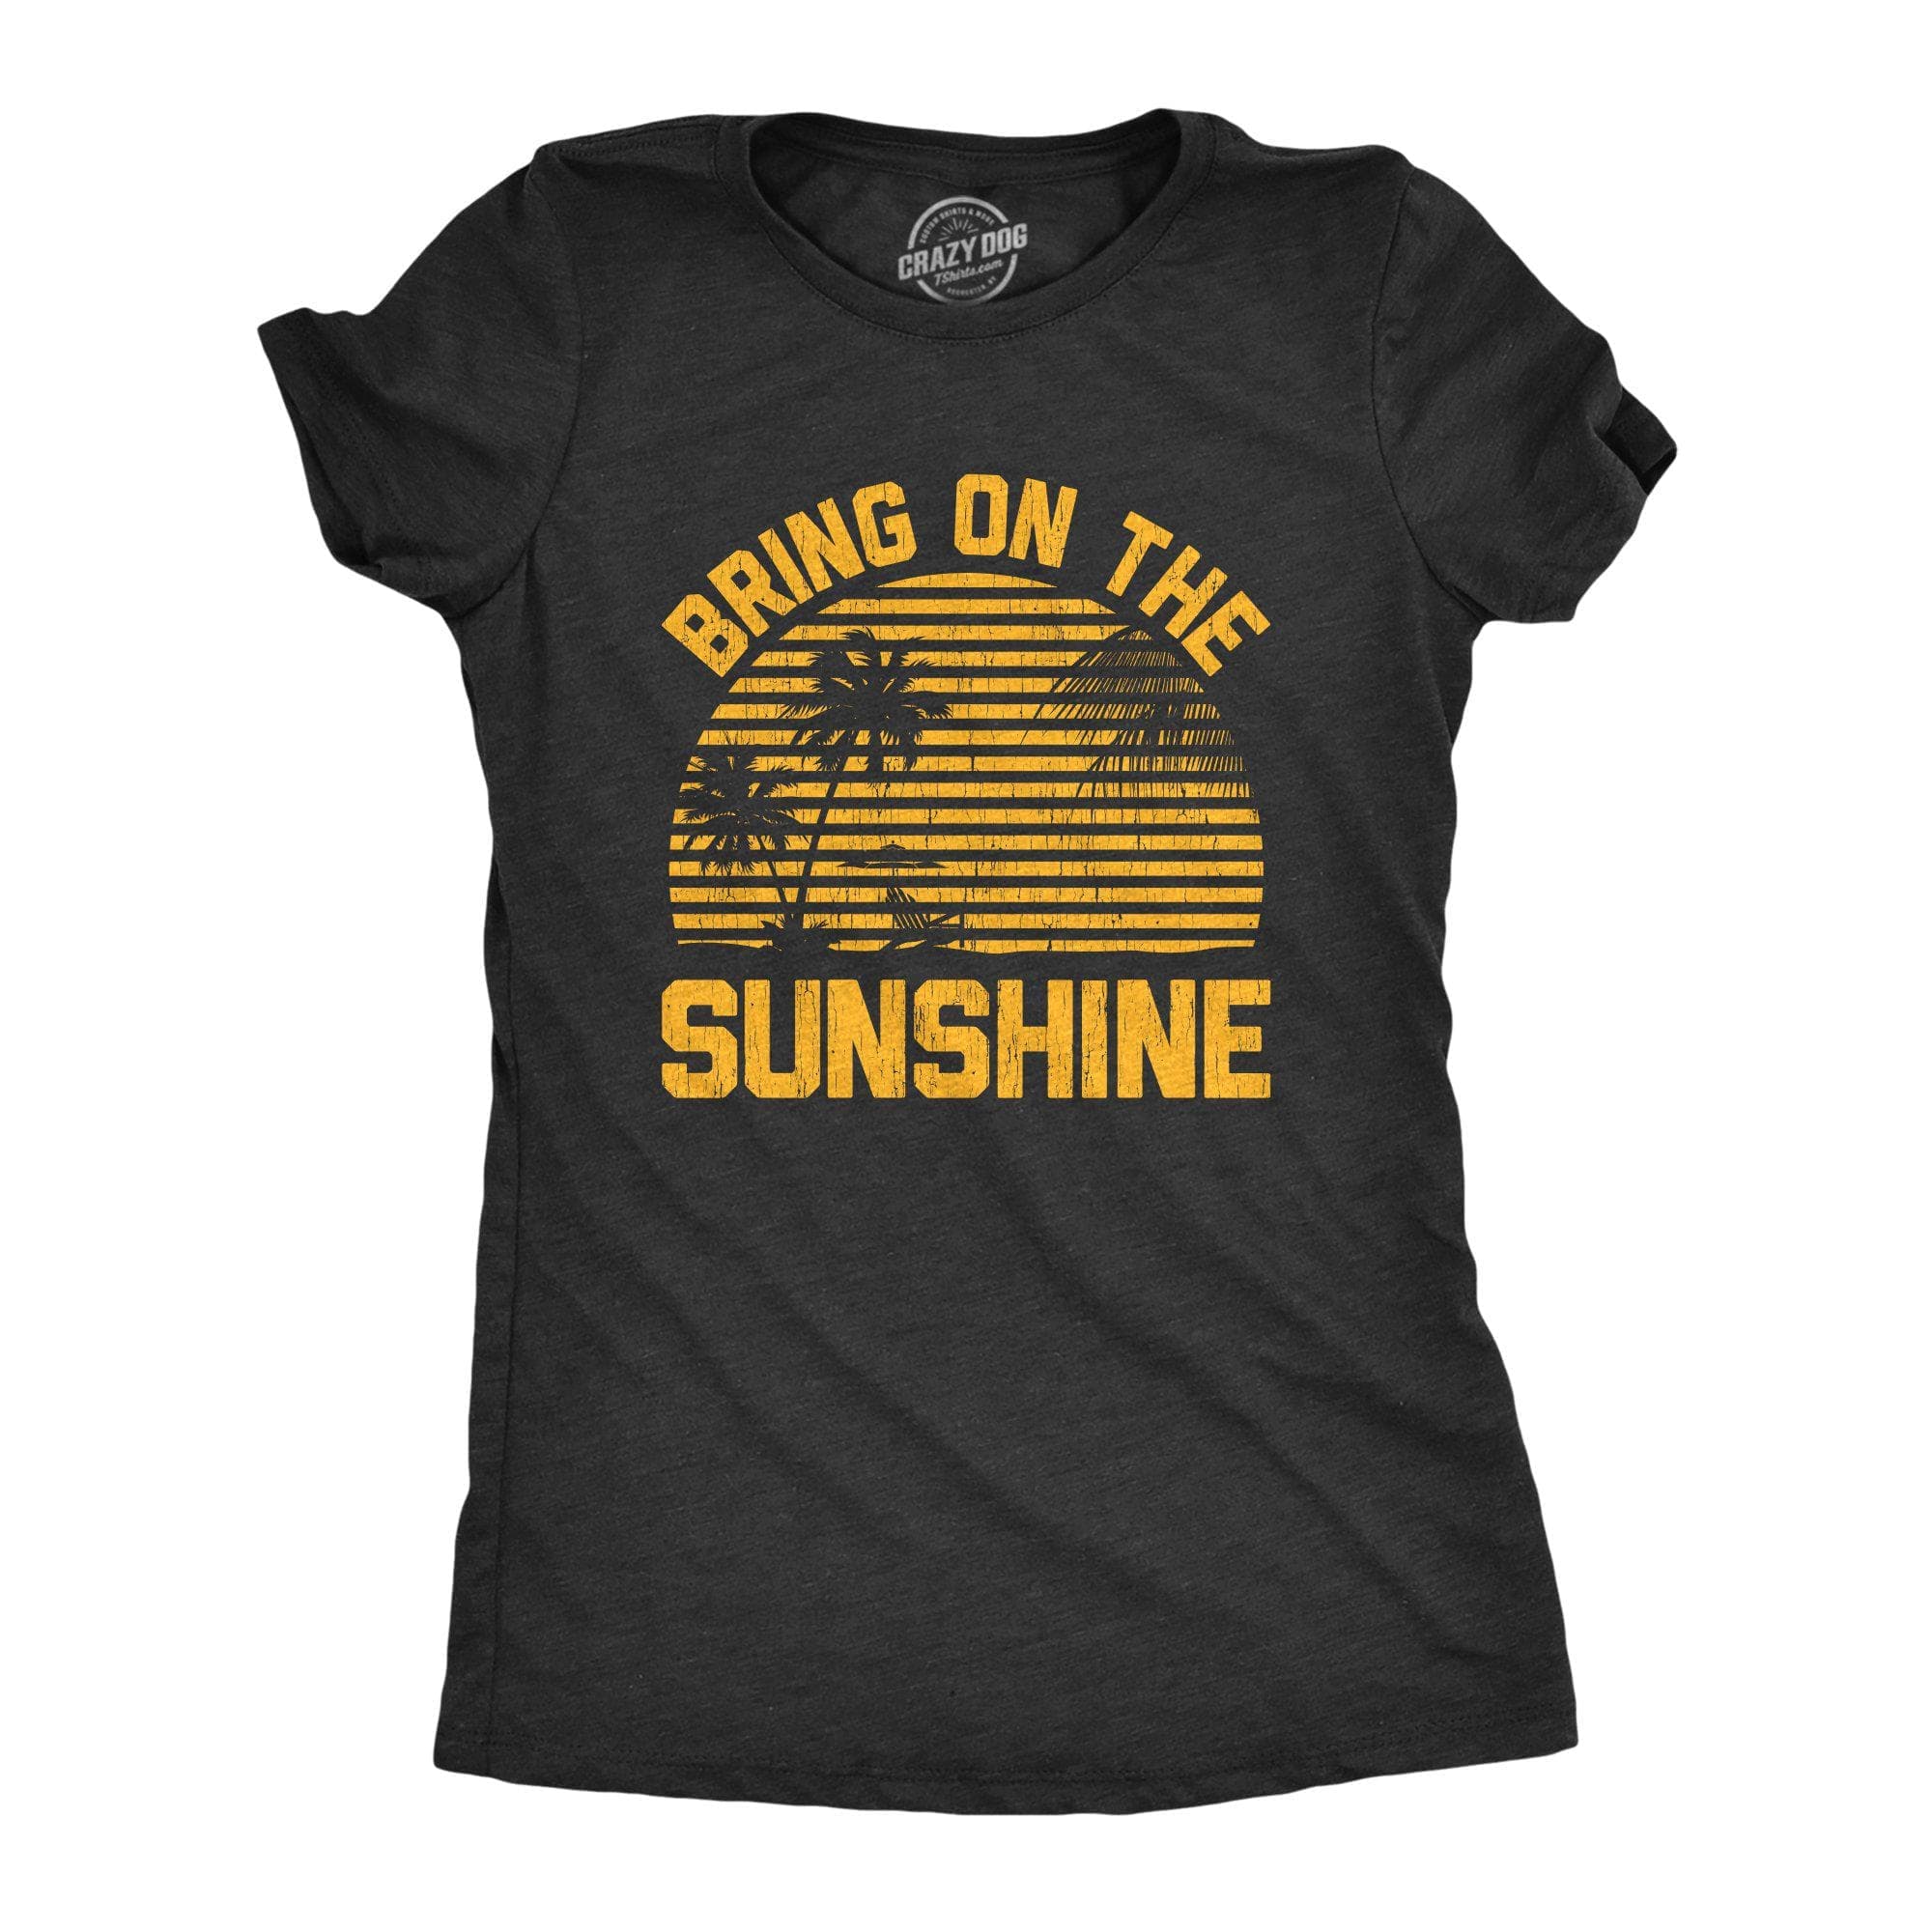 Bring On The Sunshine Women's Tshirt - Crazy Dog T-Shirts